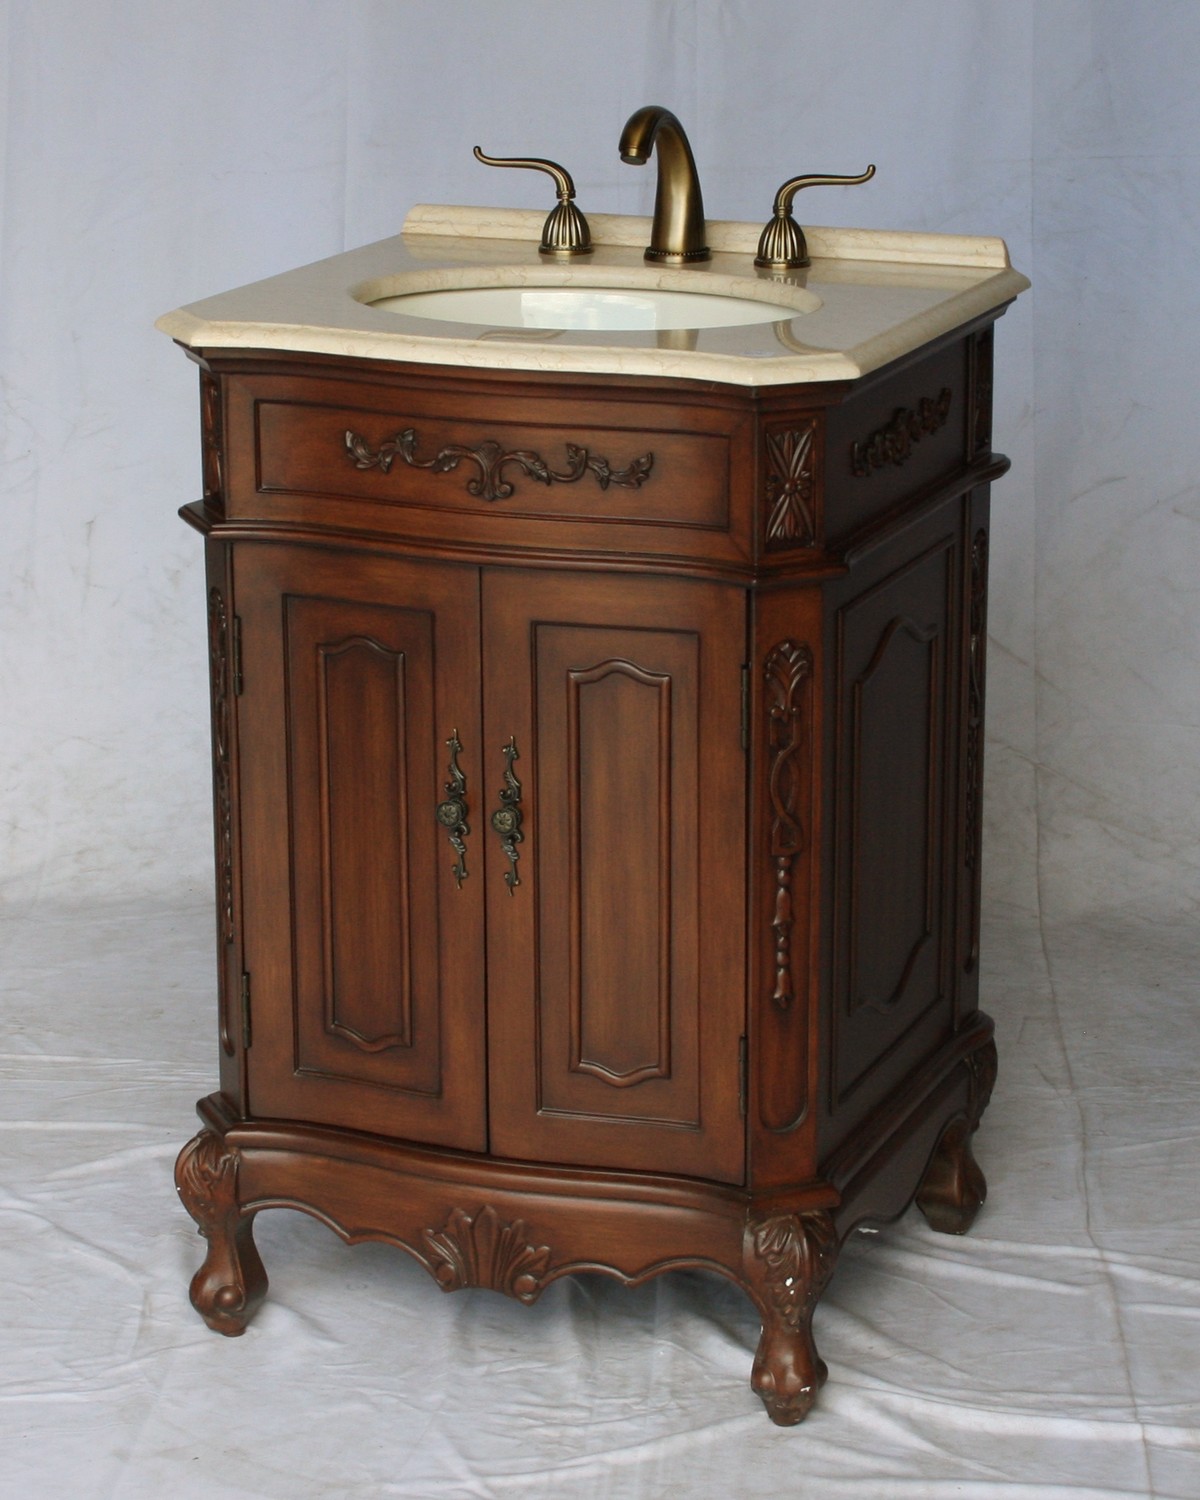 24" Adelina Antique Style Single Sink Bathroom Vanity in Walnut Finish